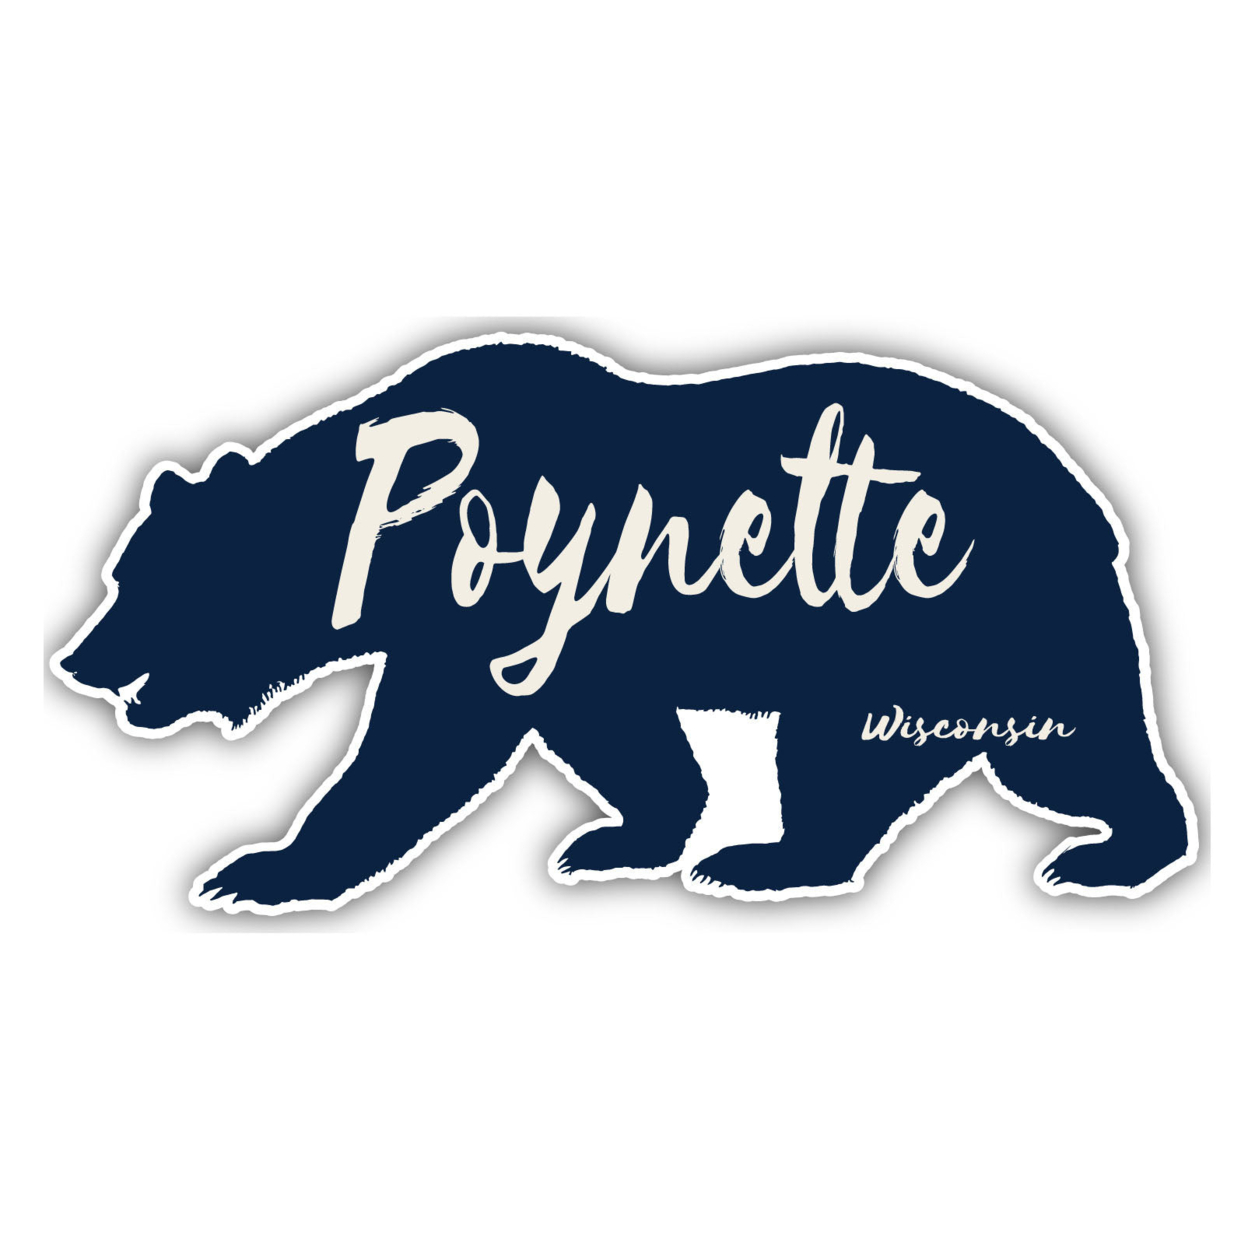 Poynette Wisconsin Souvenir Decorative Stickers (Choose Theme And Size) - Single Unit, 2-Inch, Bear